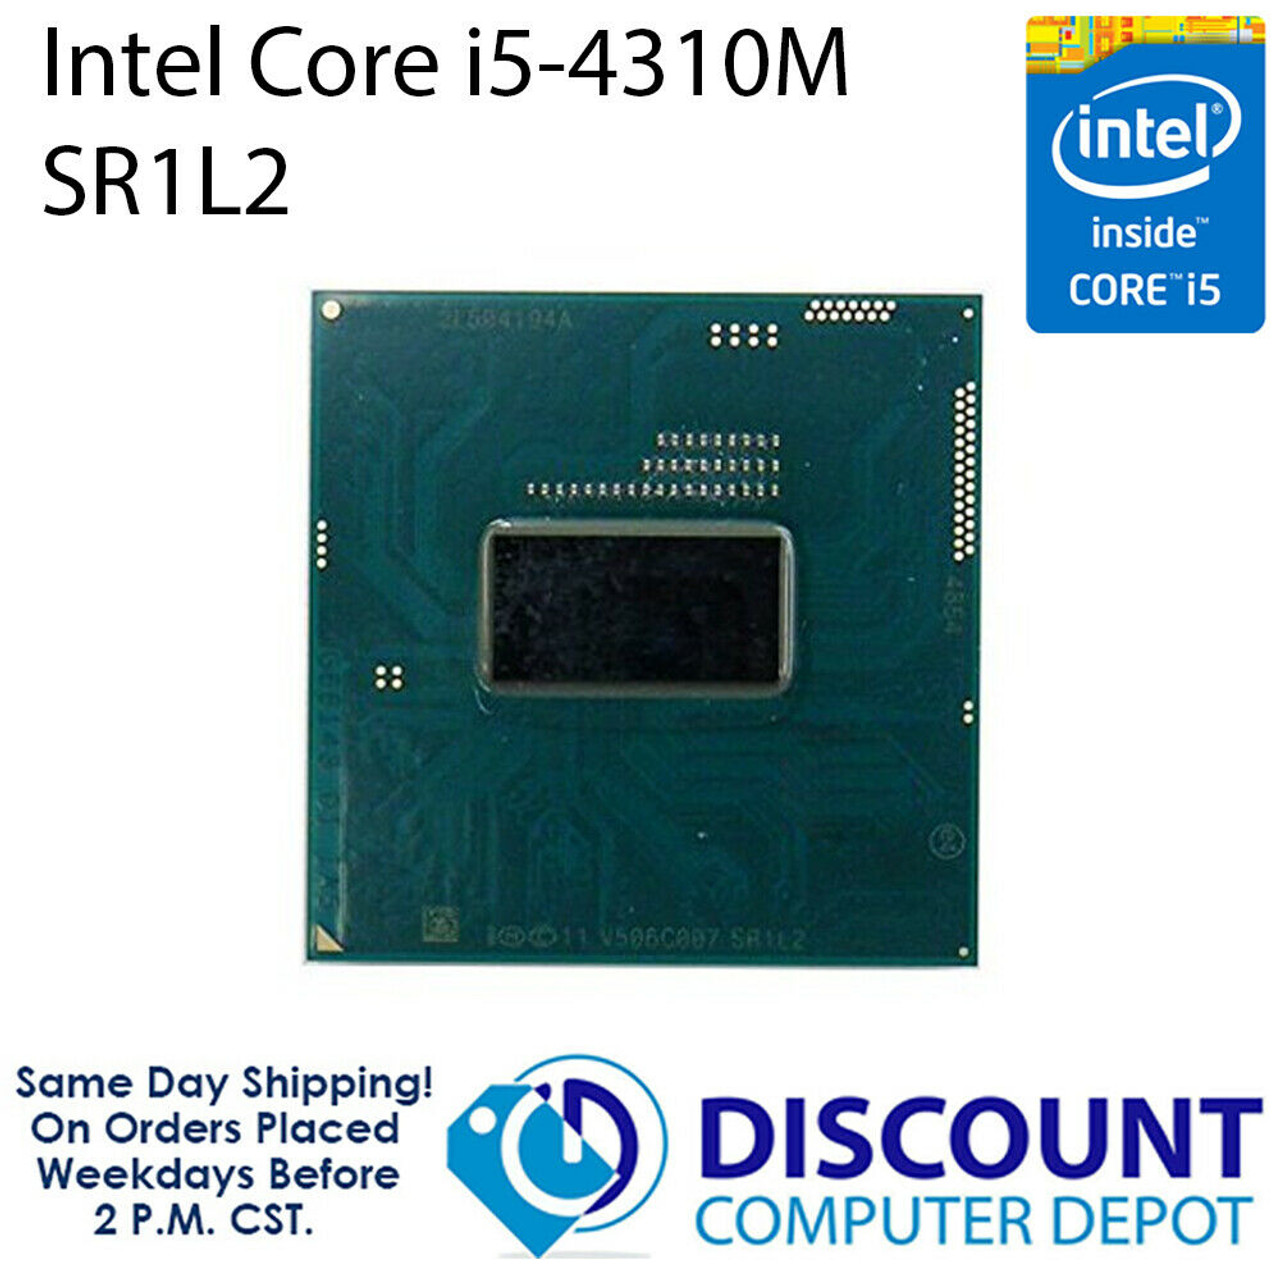 Intel Core i5-4310M 2.7 GHz SR1L2 Laptop CPU Processor PGA 946 G3 Socket